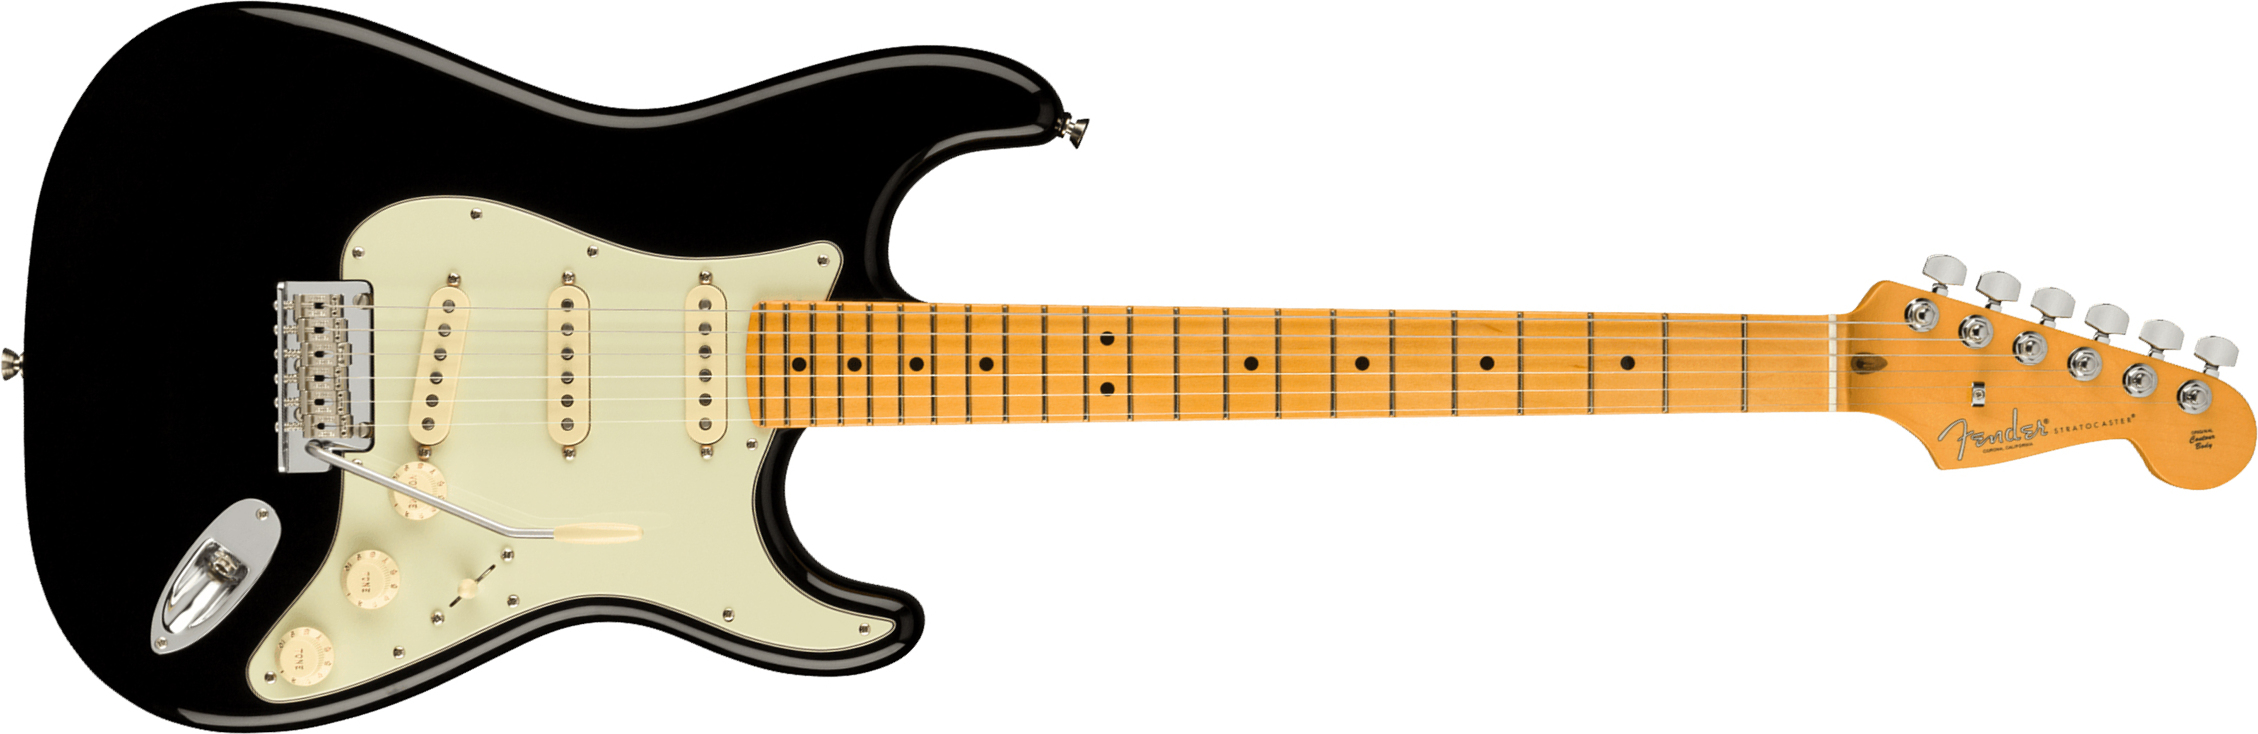 Fender Strat American Professional Ii Usa Mn - Black - E-Gitarre in Str-Form - Main picture